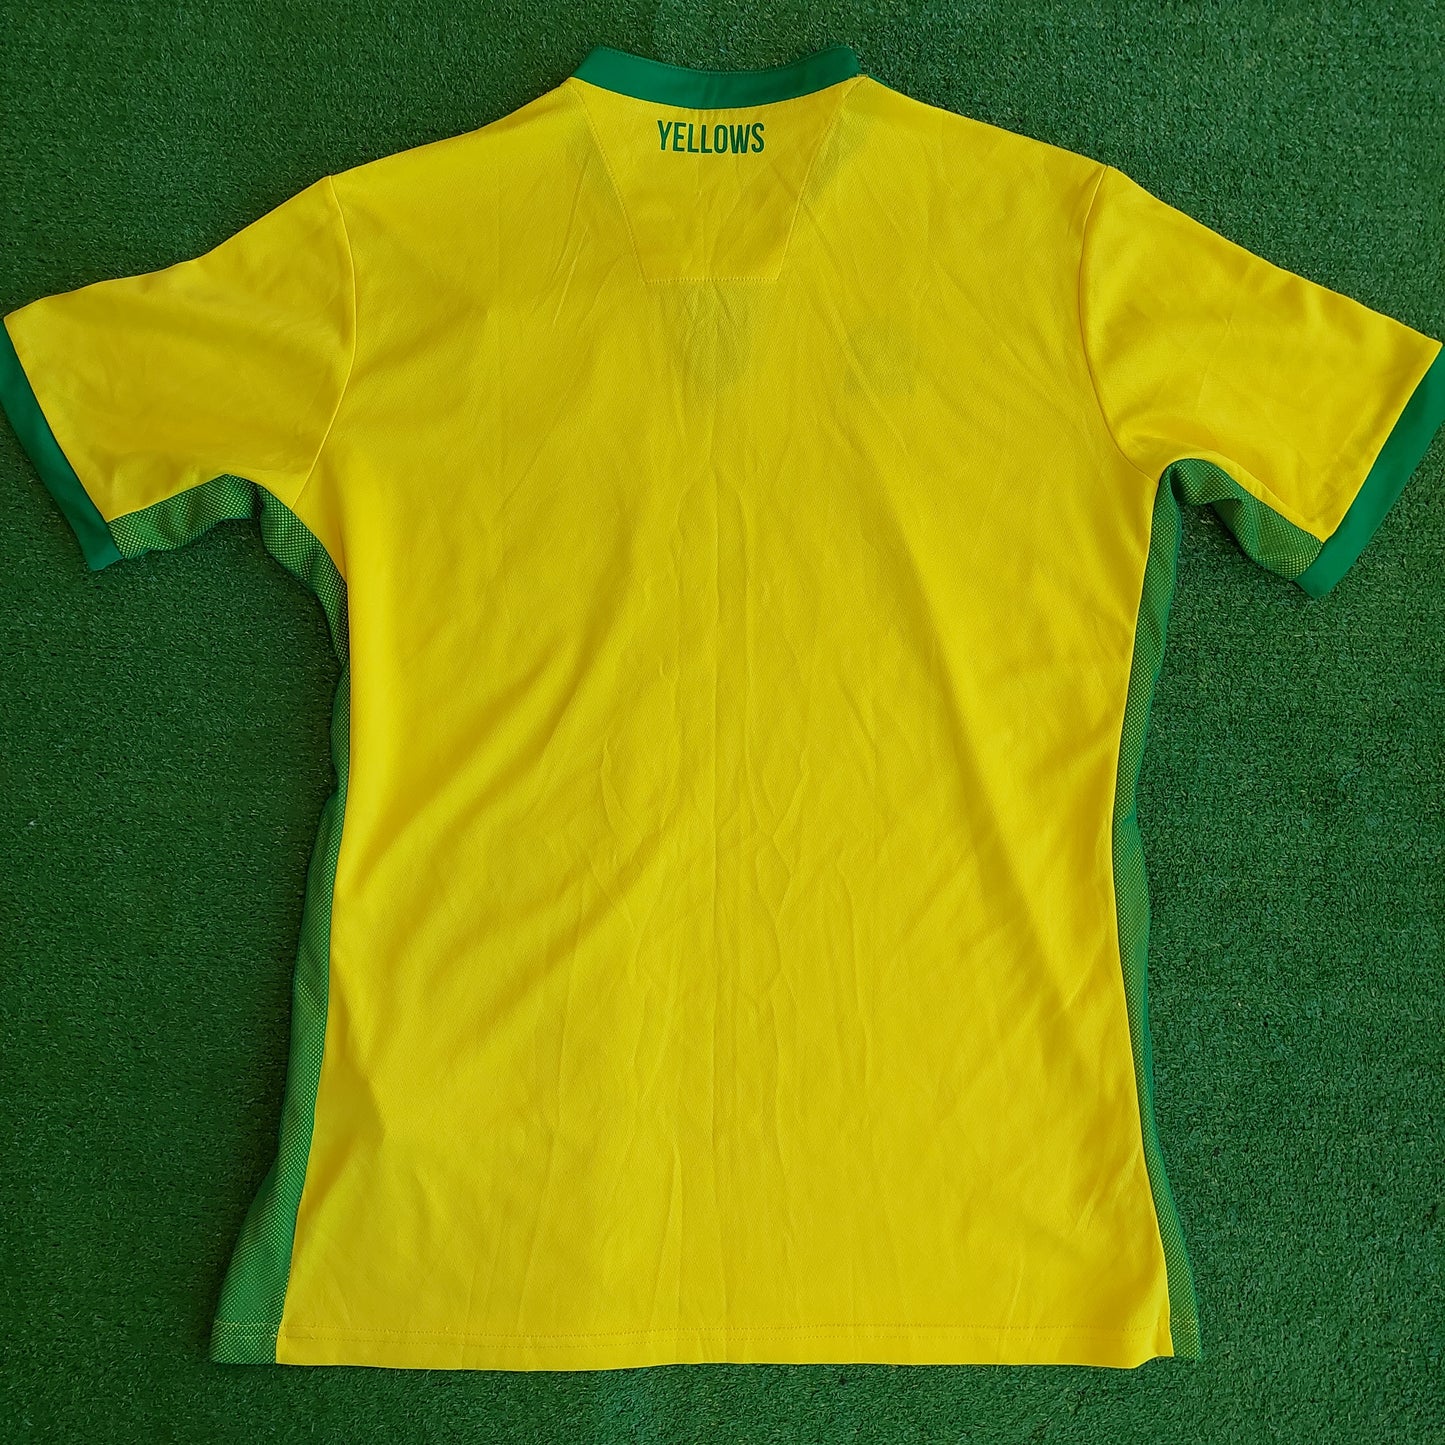 Norwich City 2016/17 Home Shirt (Very Good) - Size XXL